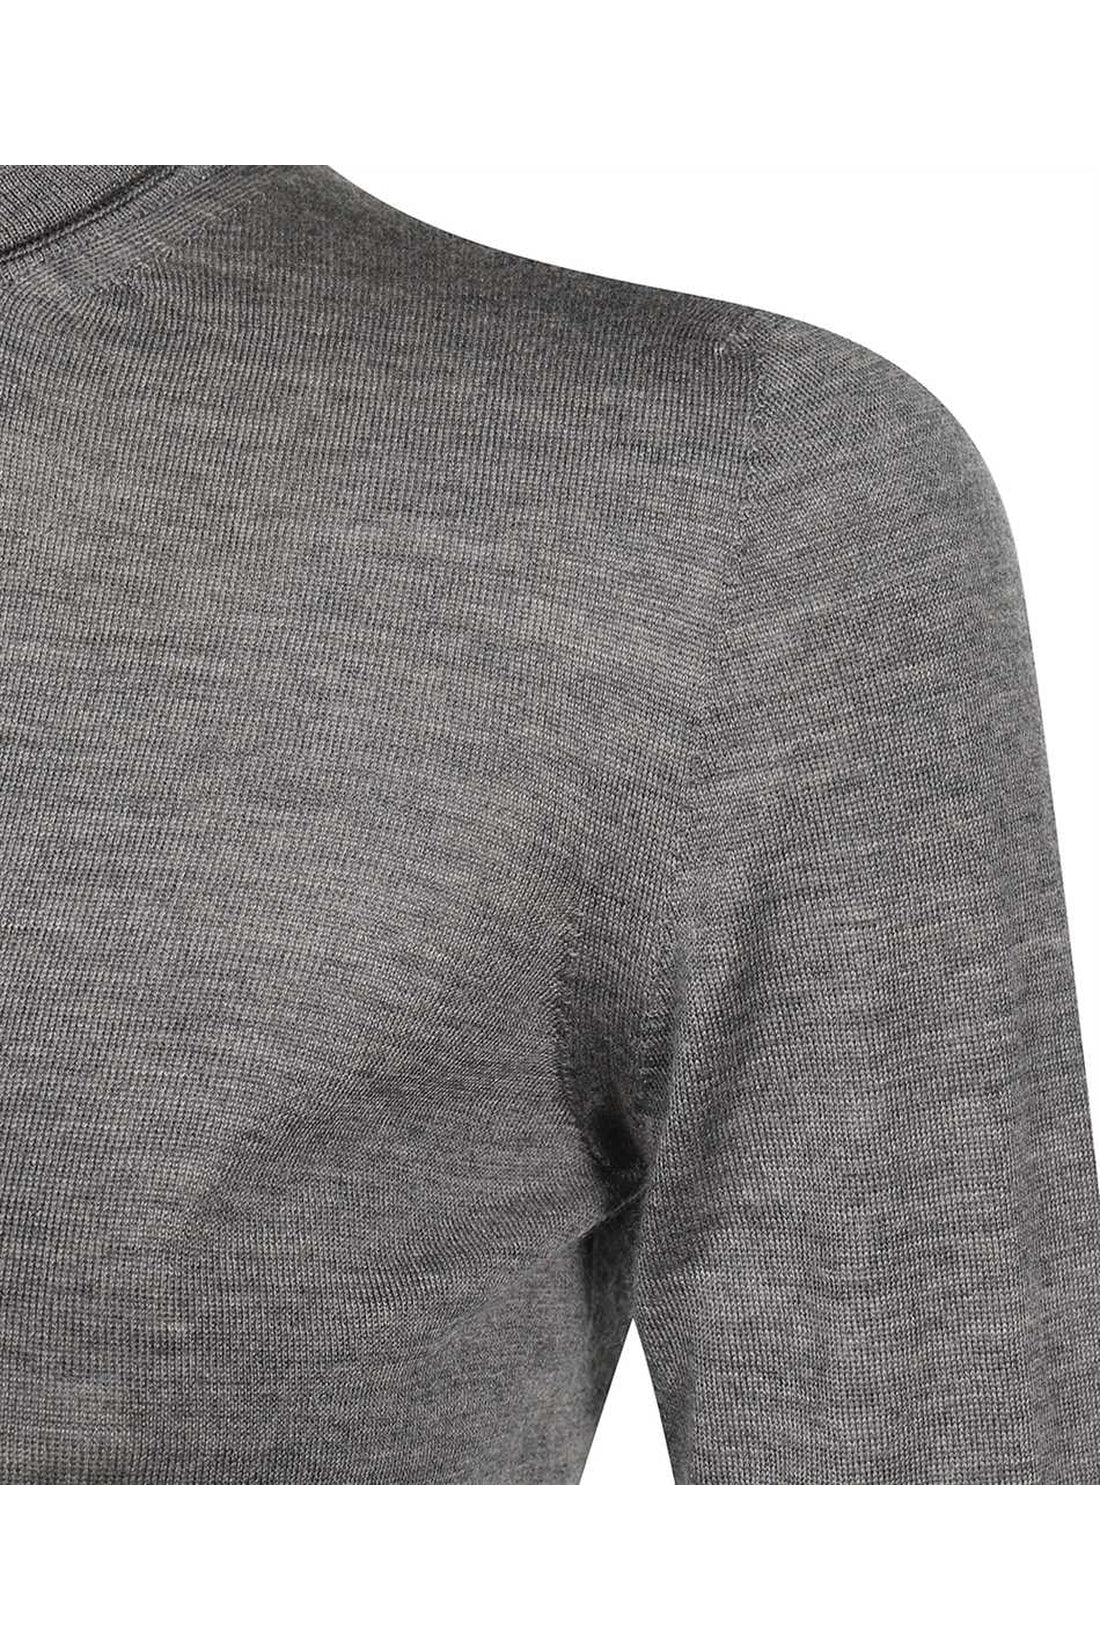 Max Mara-OUTLET-SALE-Saluto virgin-wool turtleneck sweater-ARCHIVIST